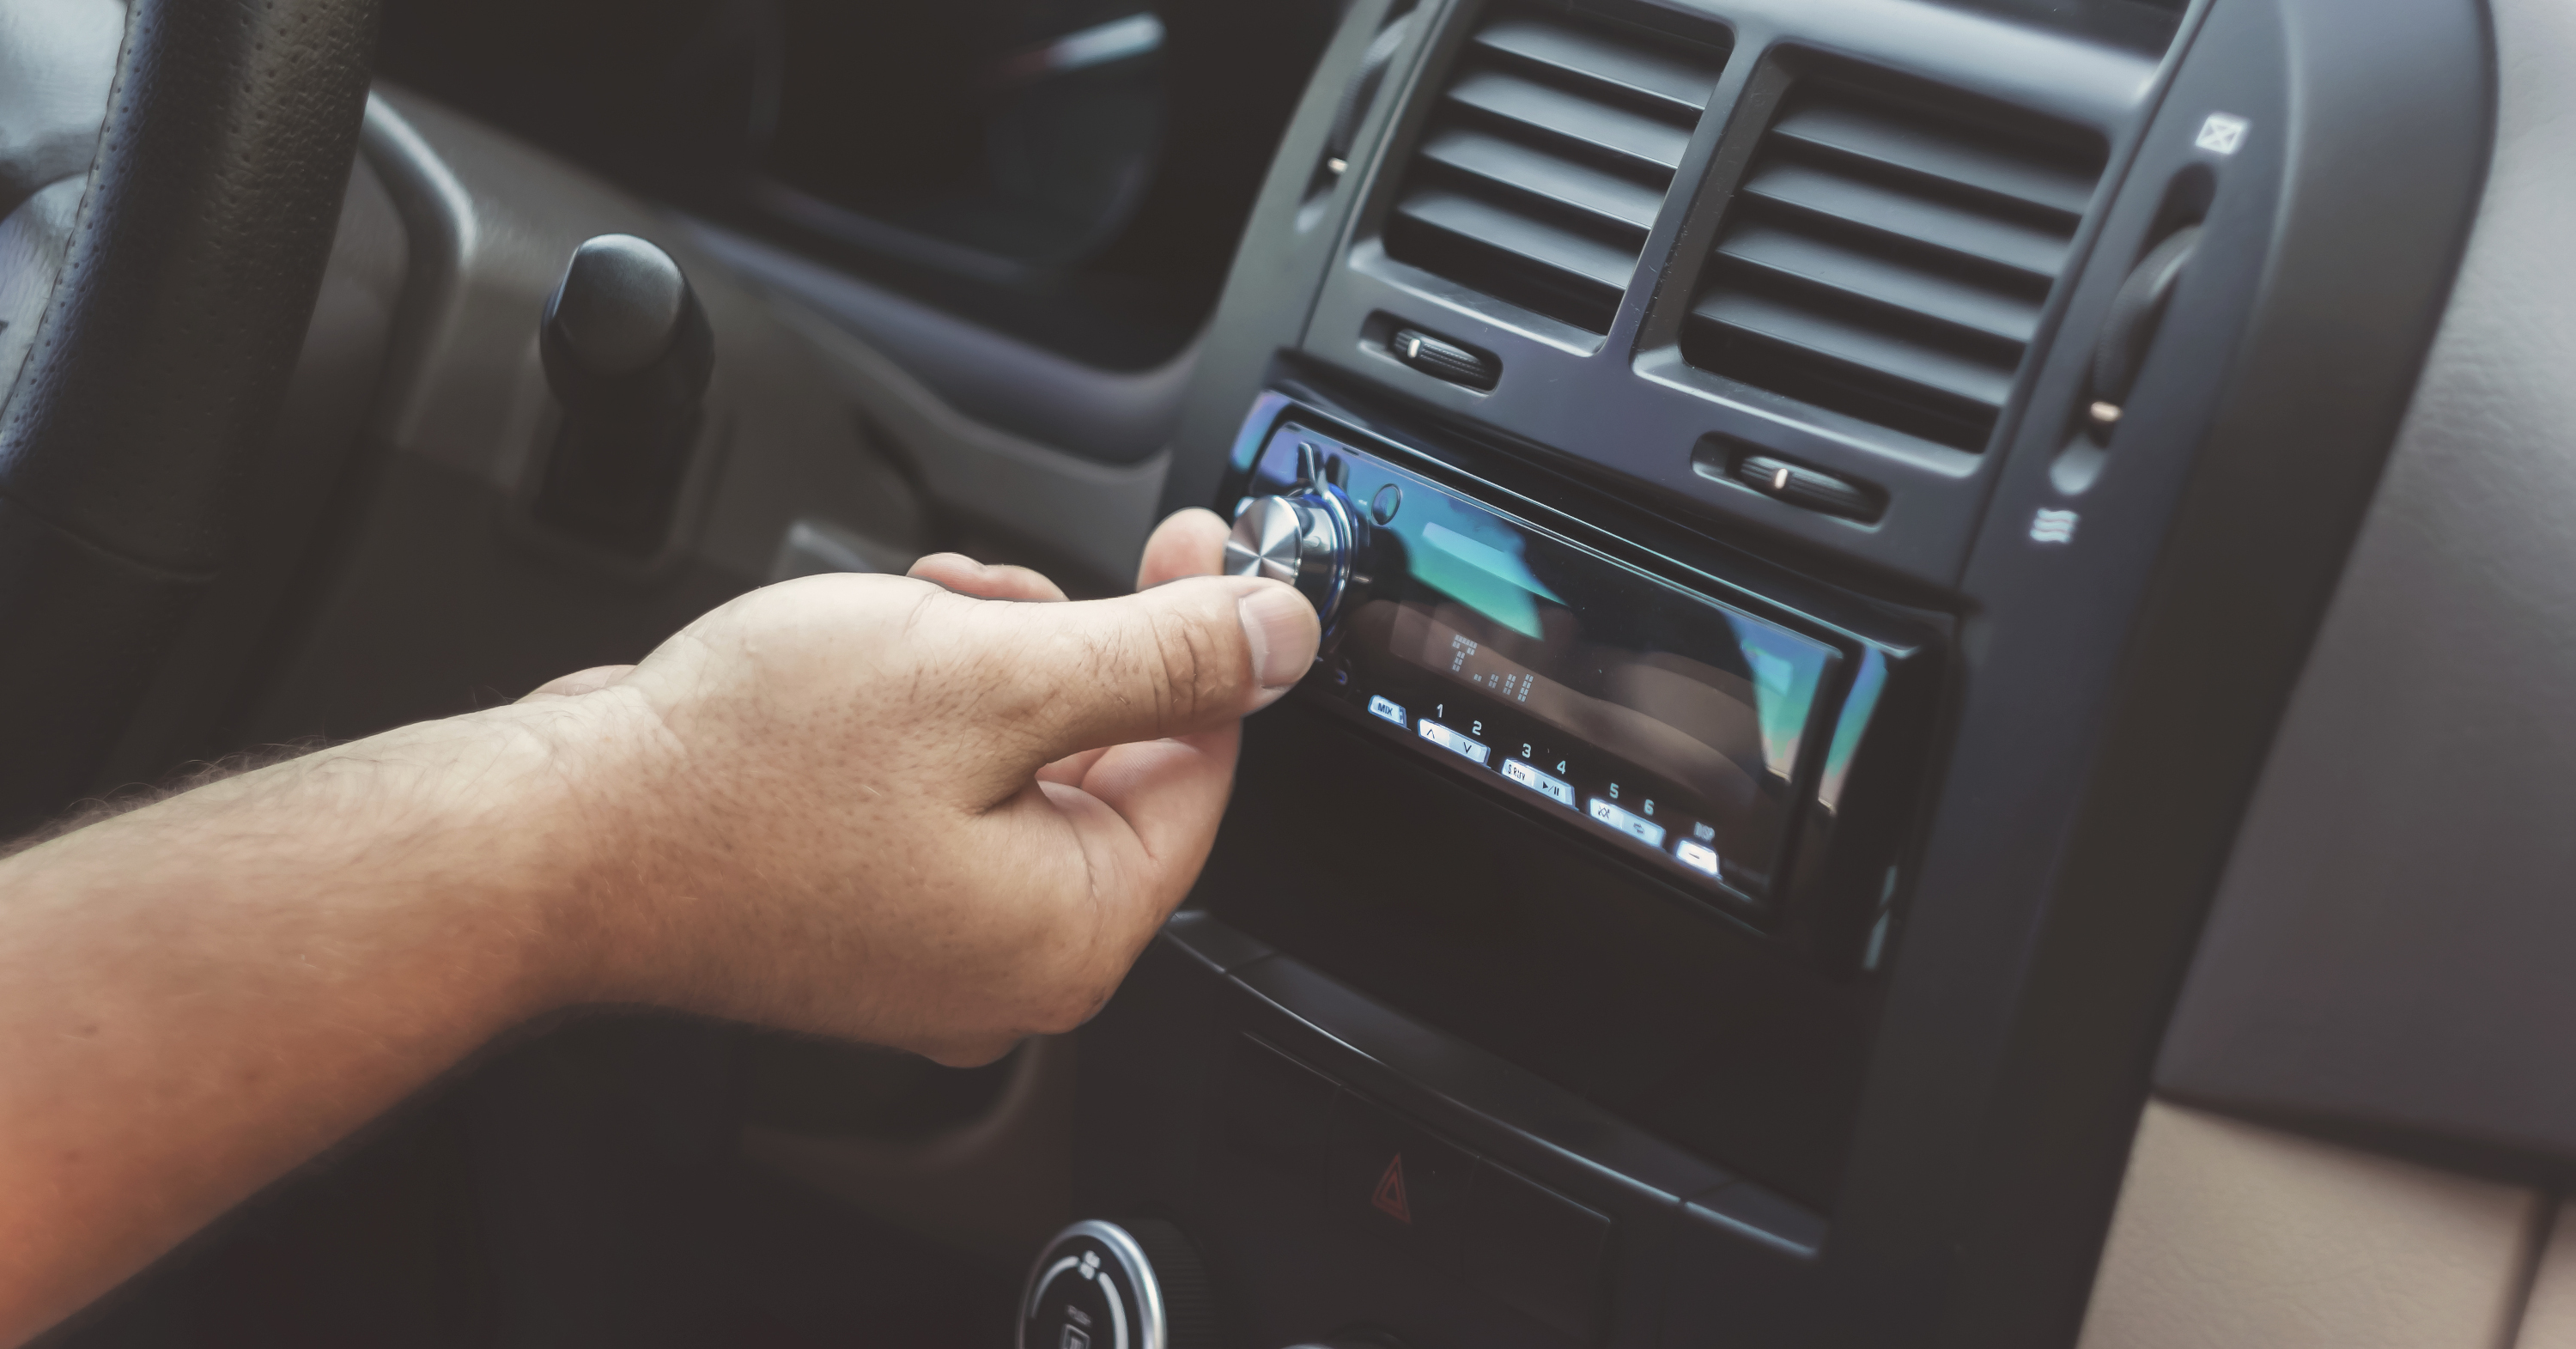 Automático Comercio vulgar 5 radios con Bluetooth para coche que son sorprendentemente baratas |  Computer Hoy